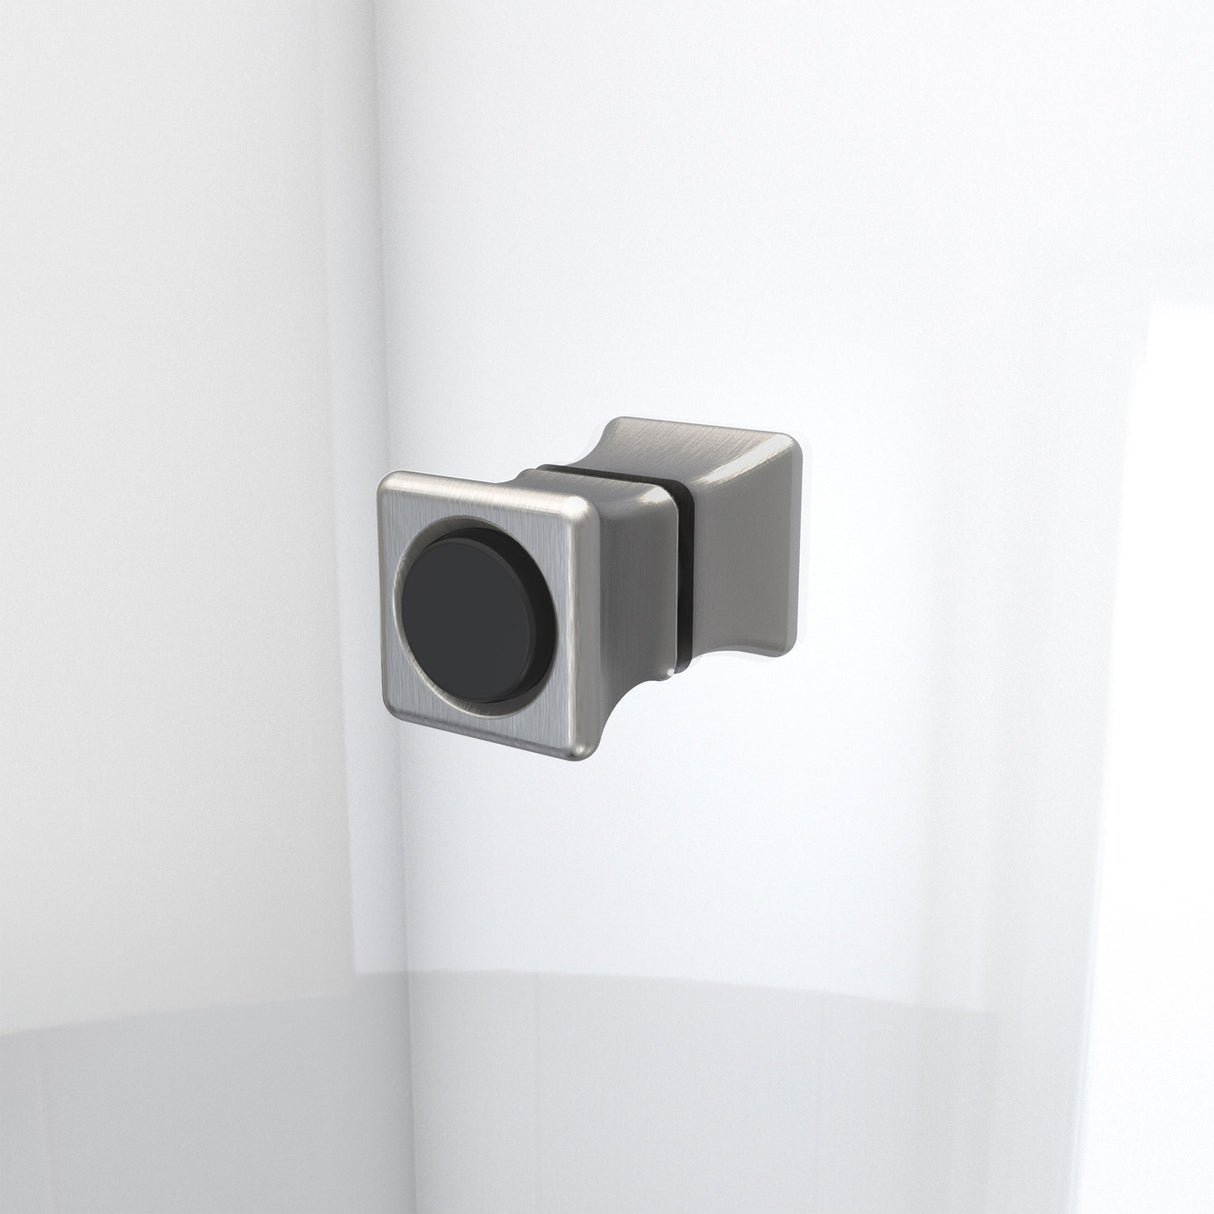 DreamLine Aqua-Q Fold 33 1/2 in. W x 72 in. H Frameless Bi-Fold Shower Door in Brushed Nickel